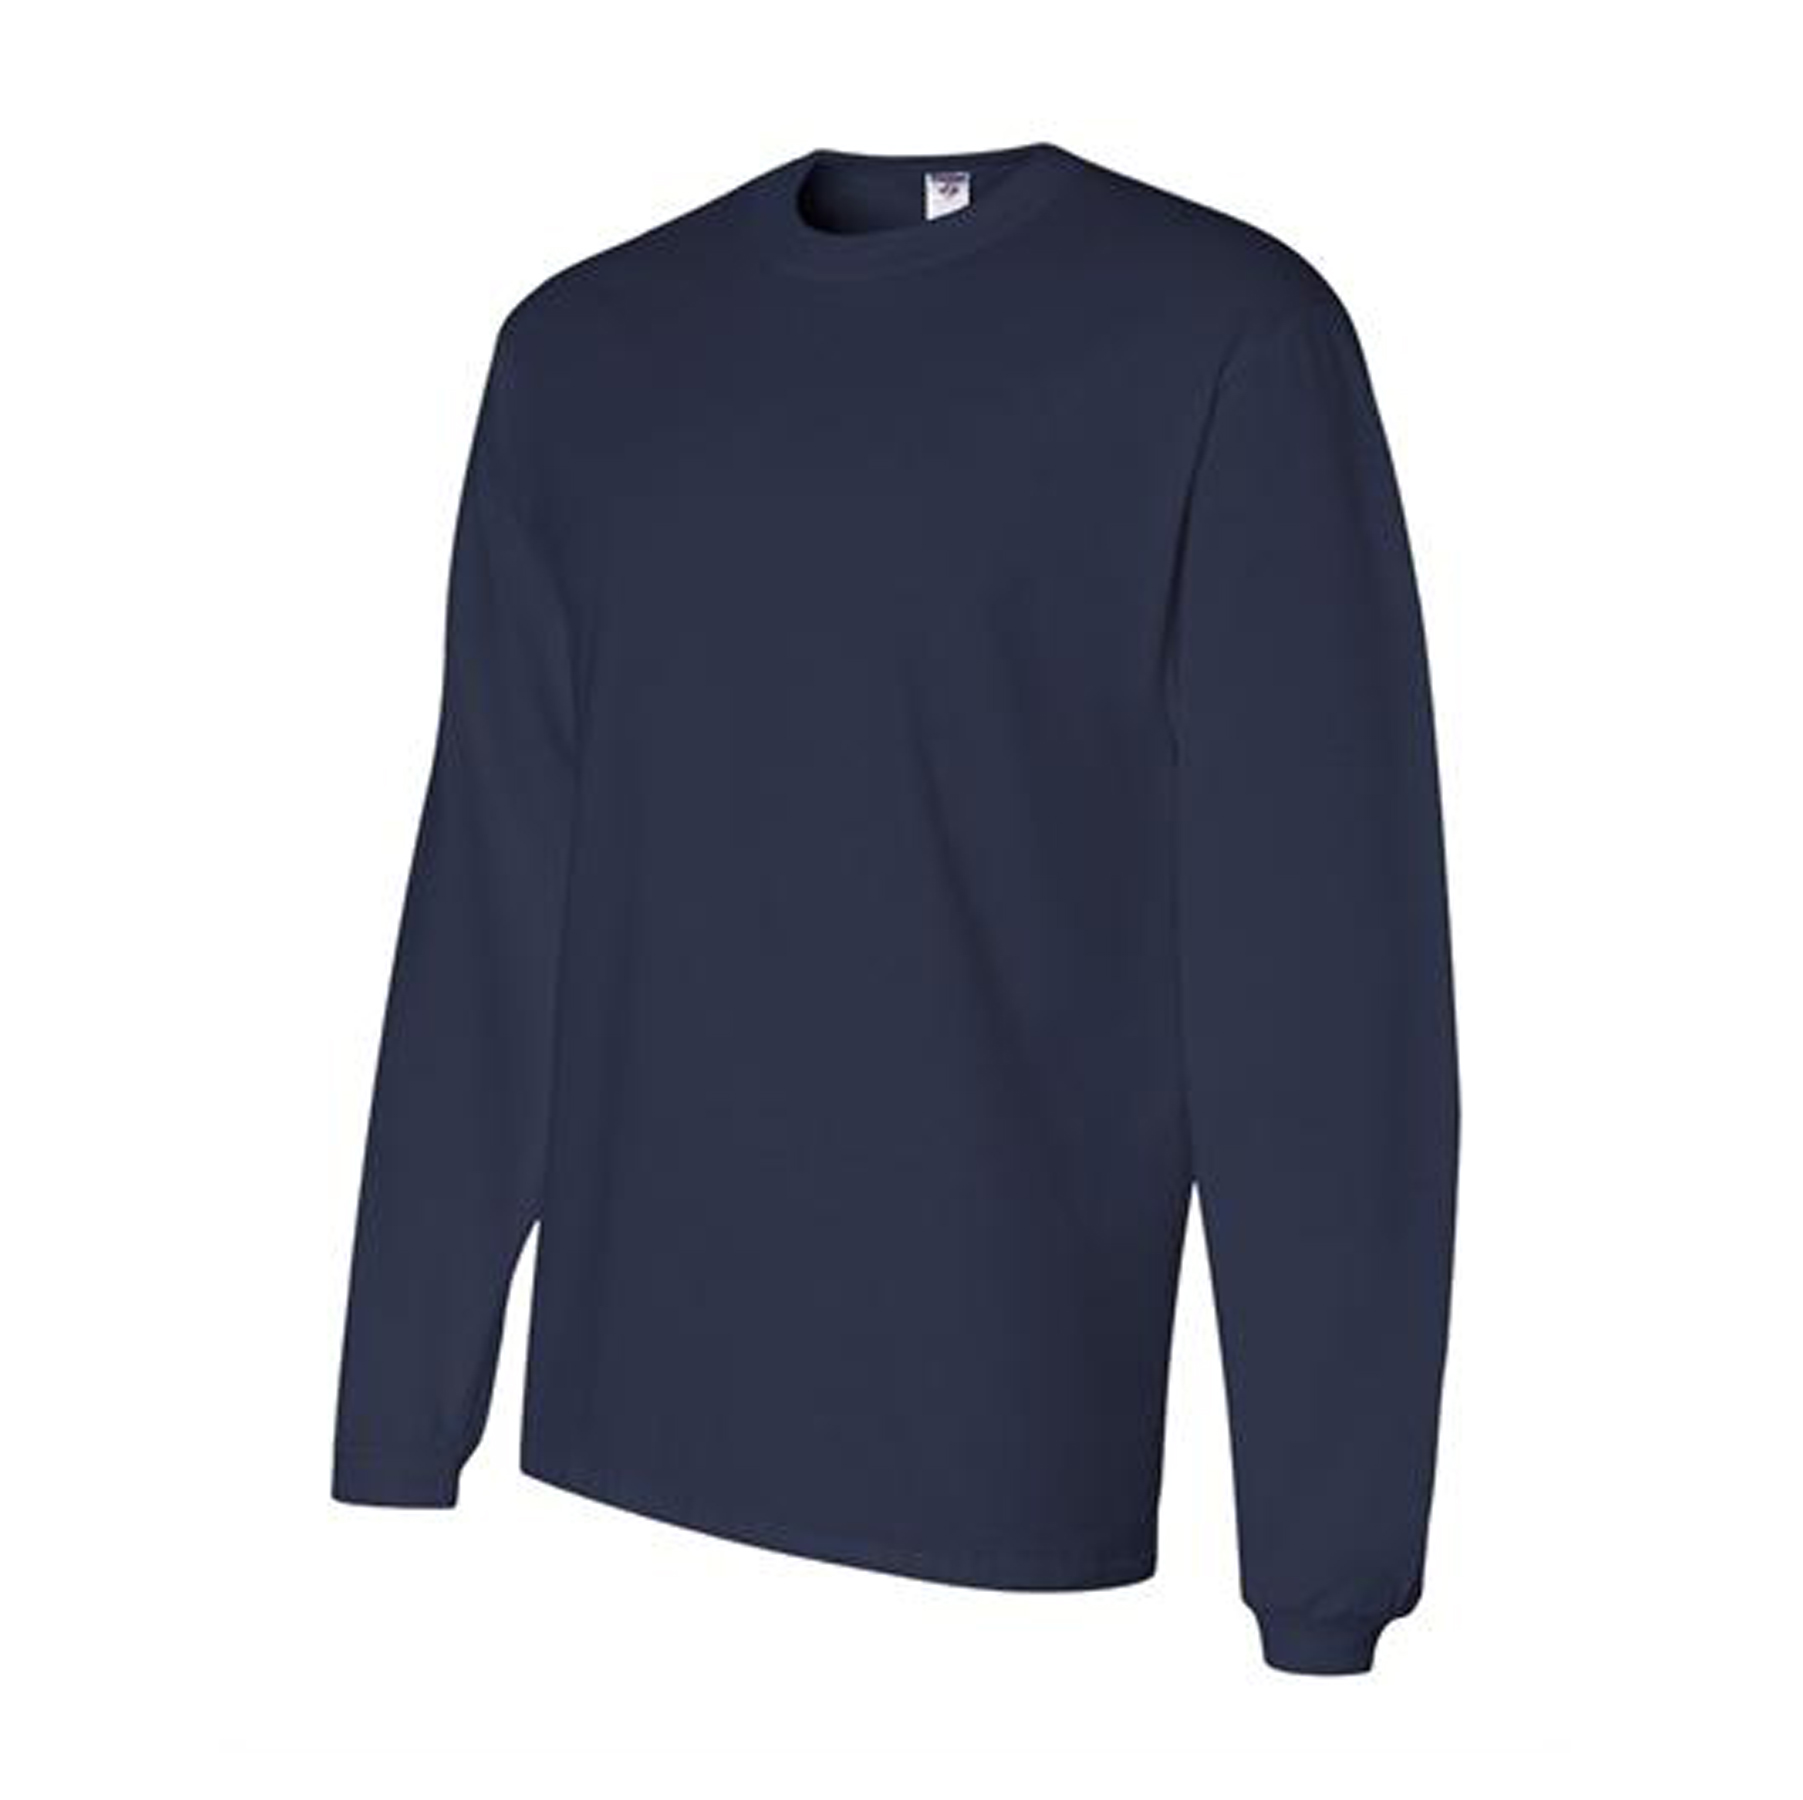 Gildan Long Sleeve Navy T-Shirt